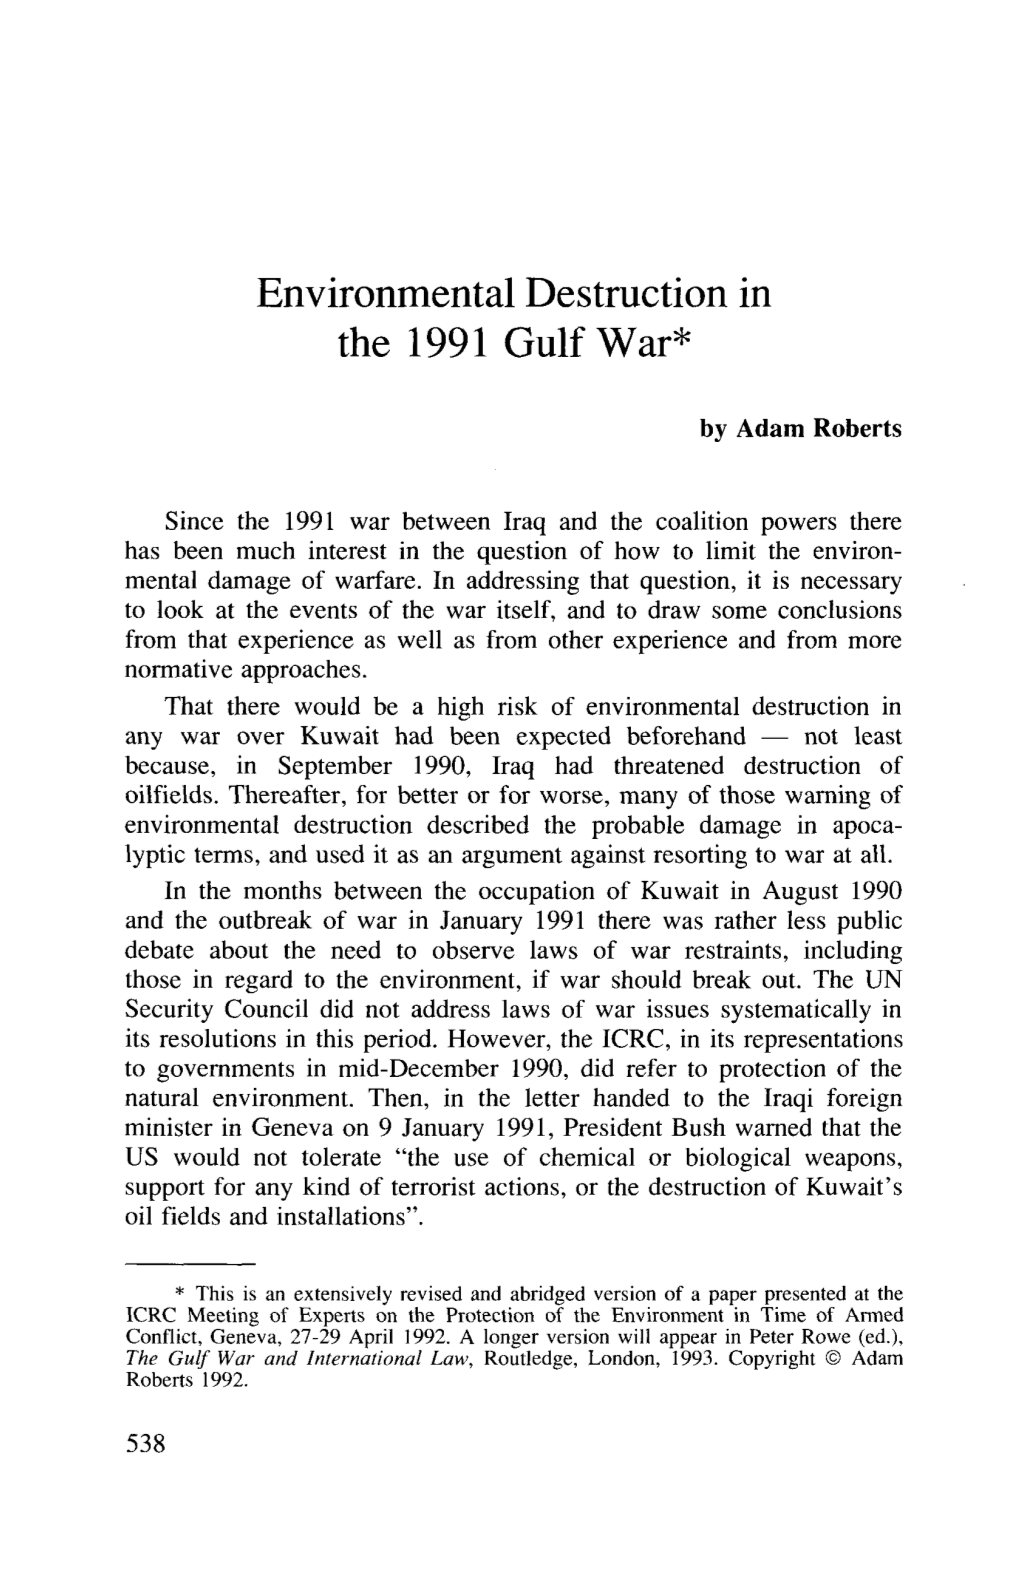 Environmental Destruction in the 1991 Gulf War*